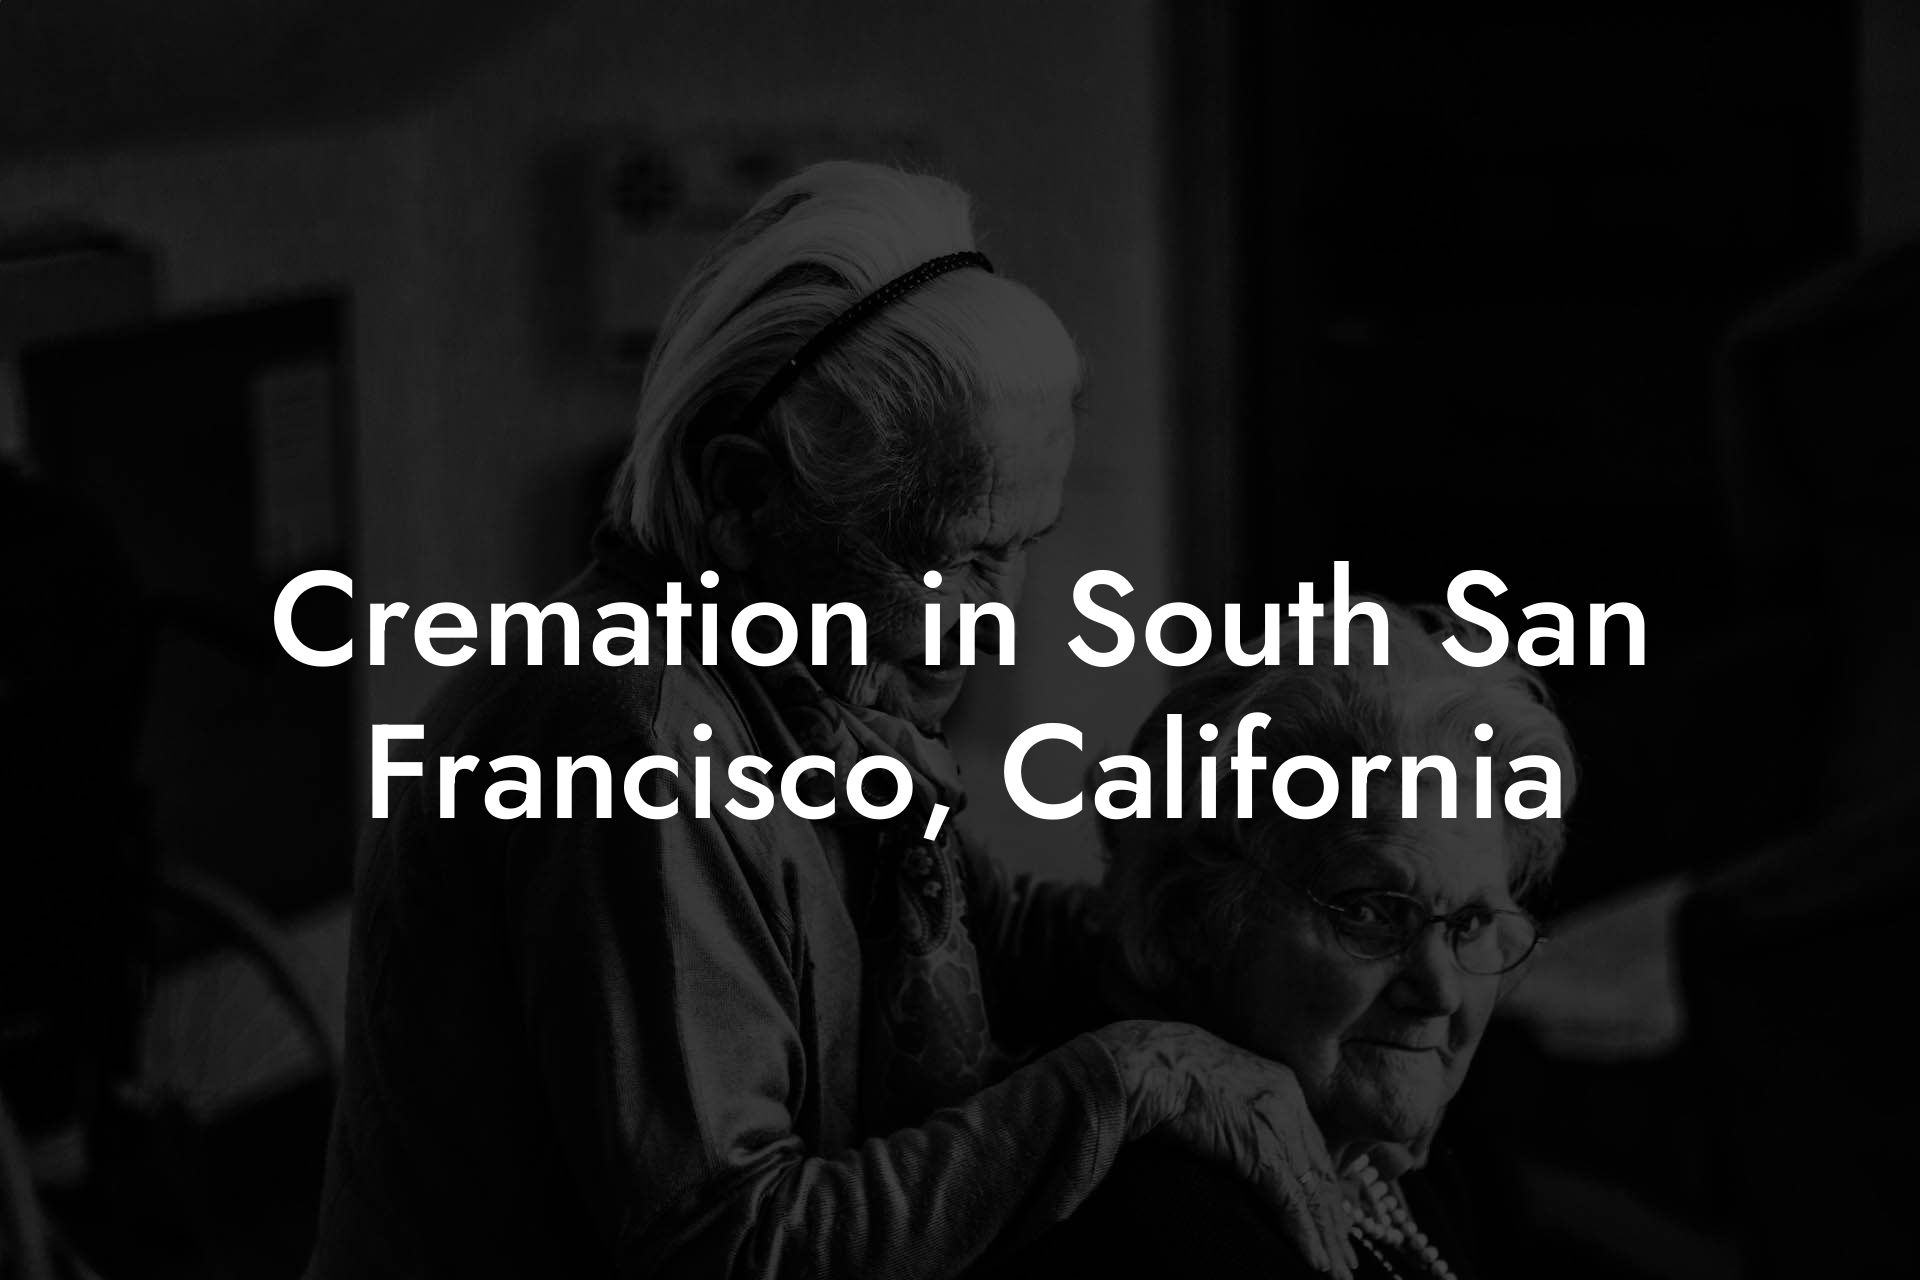 Cremation in South San Francisco, California